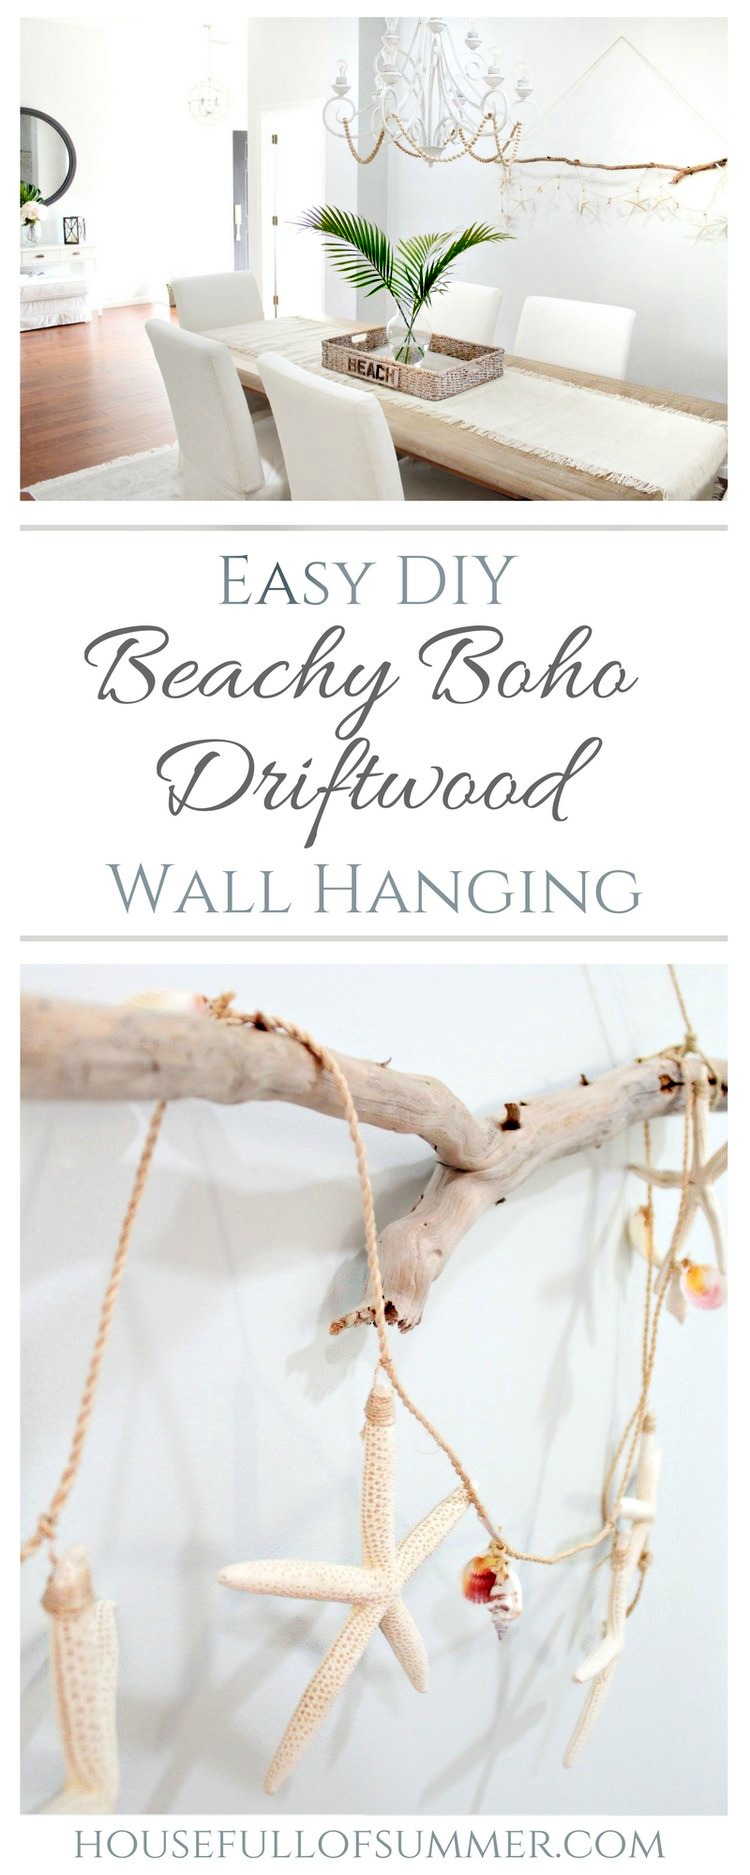 DIY Driftwood Wall Hanging 